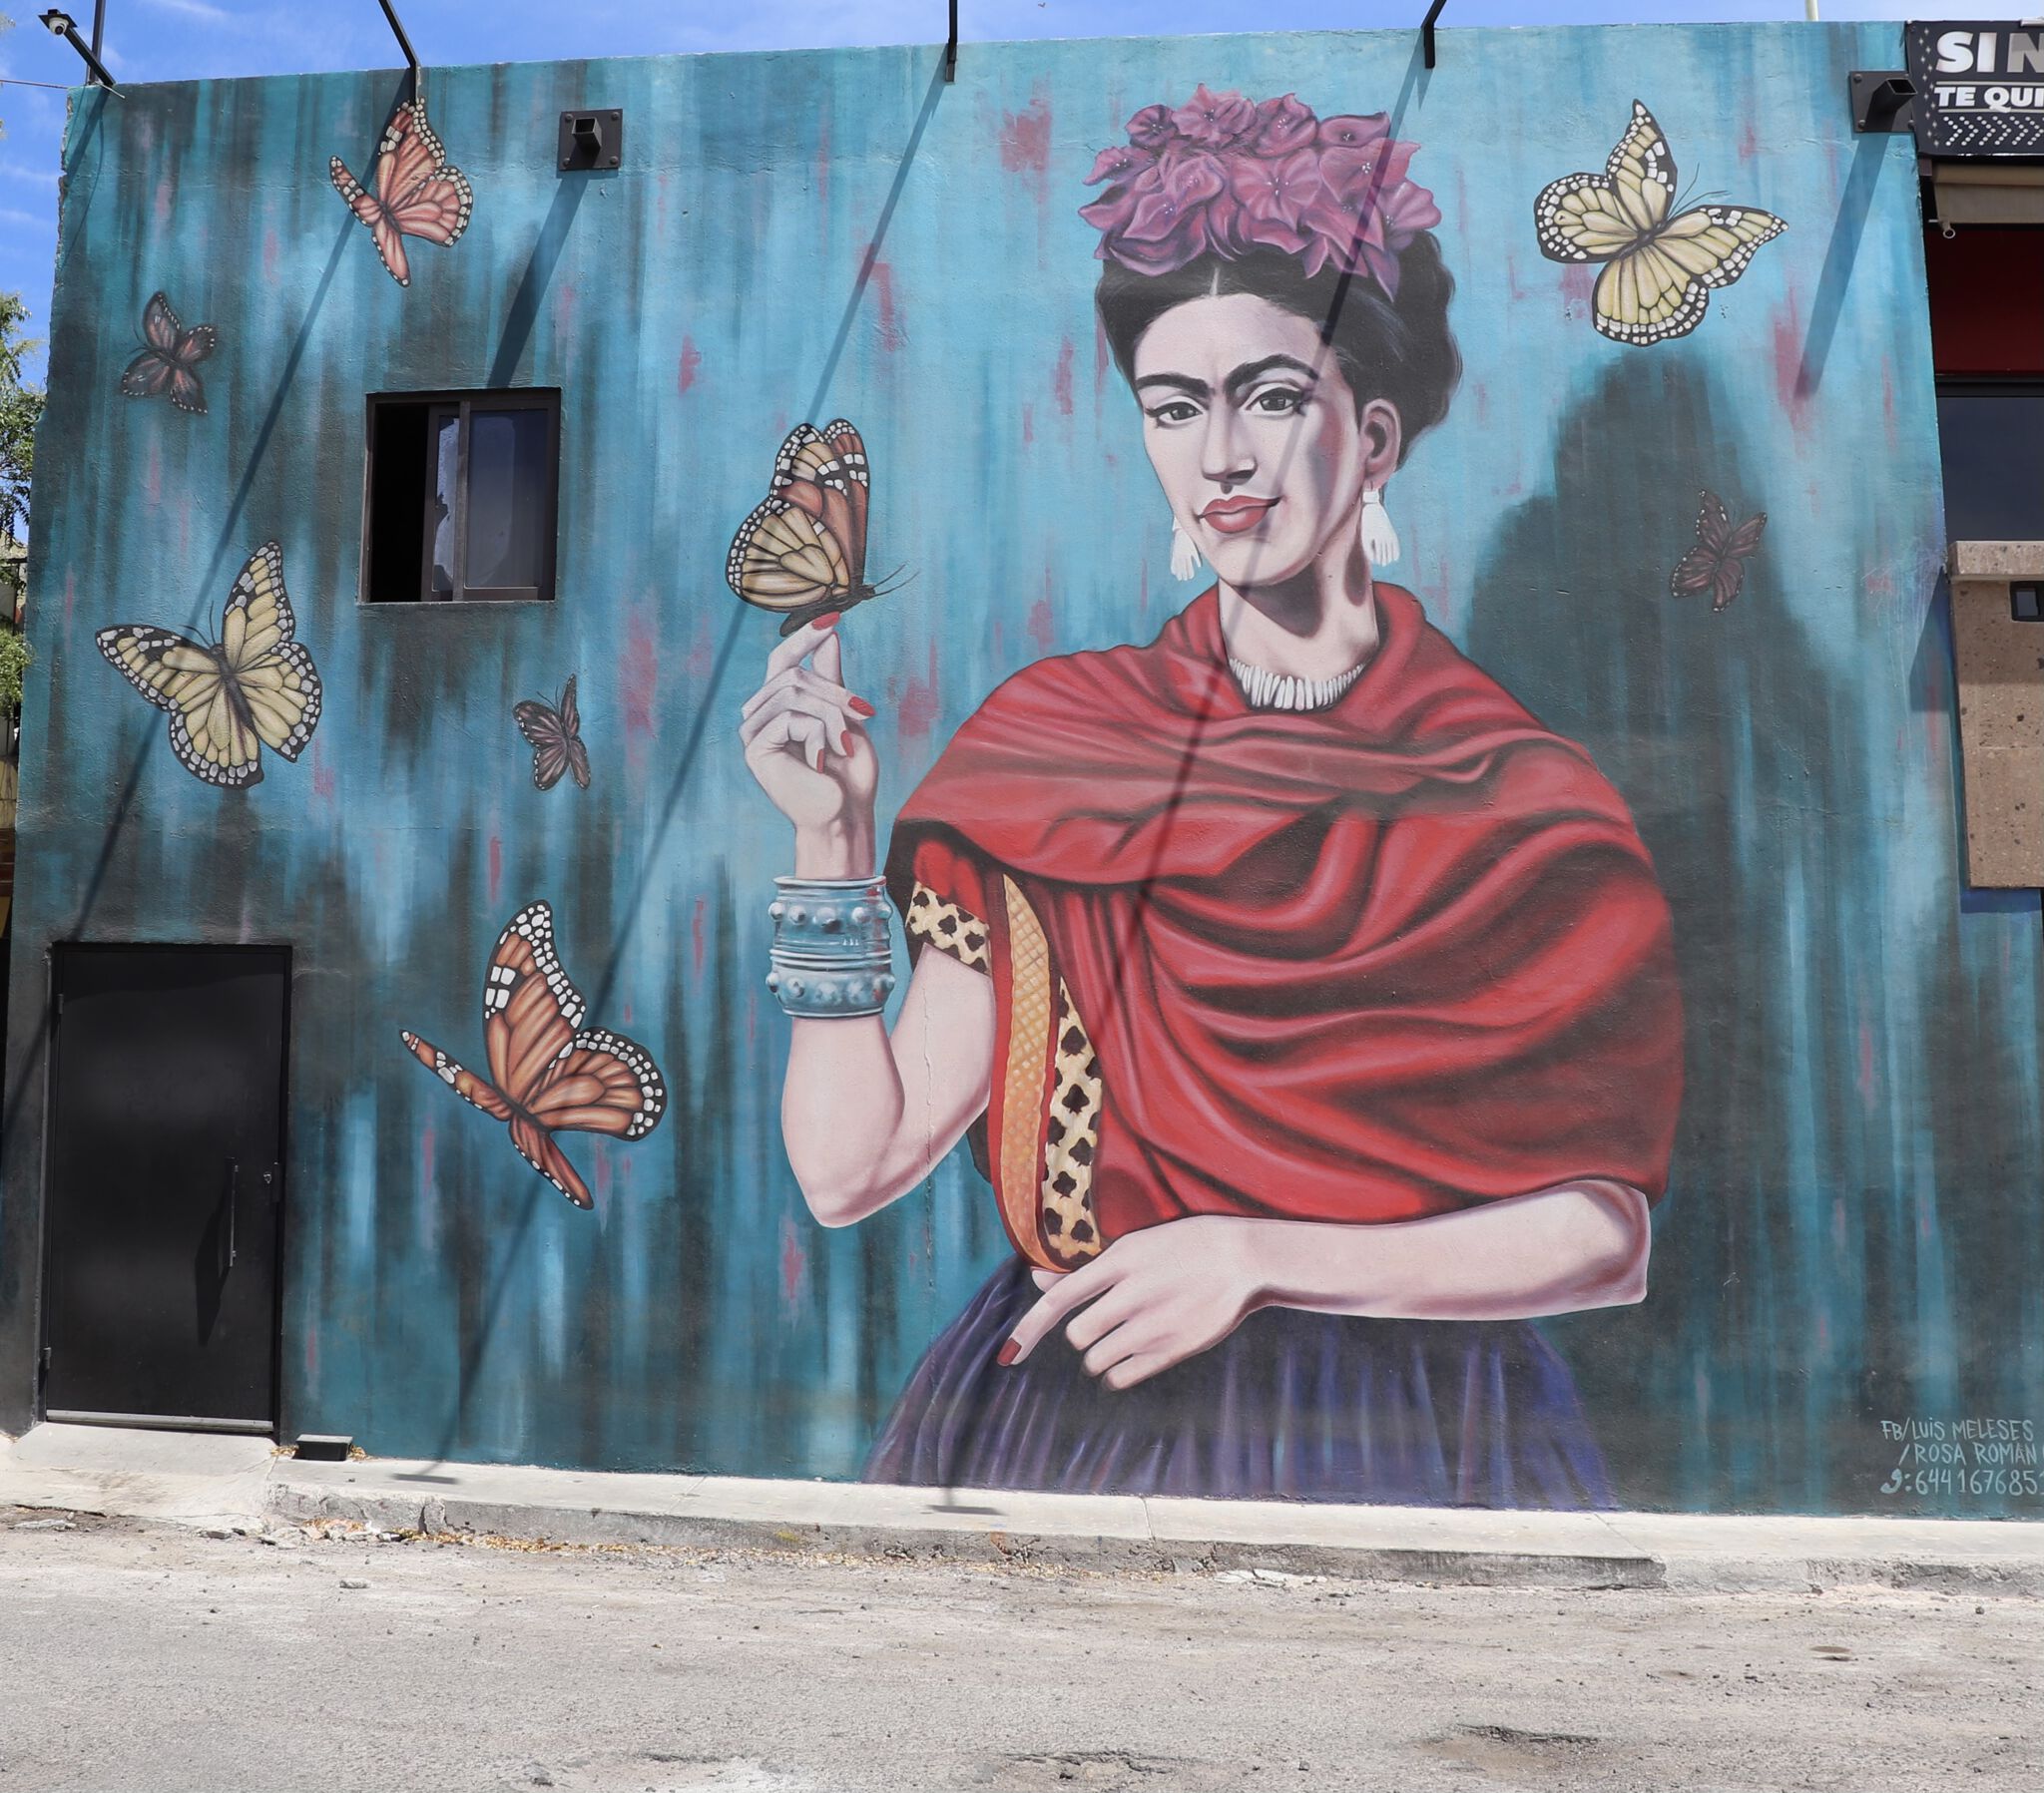 luis Meleses, Rosa Román&mdash;Mural Frida Kahlo Restaurante Bar Las Mal Queridas